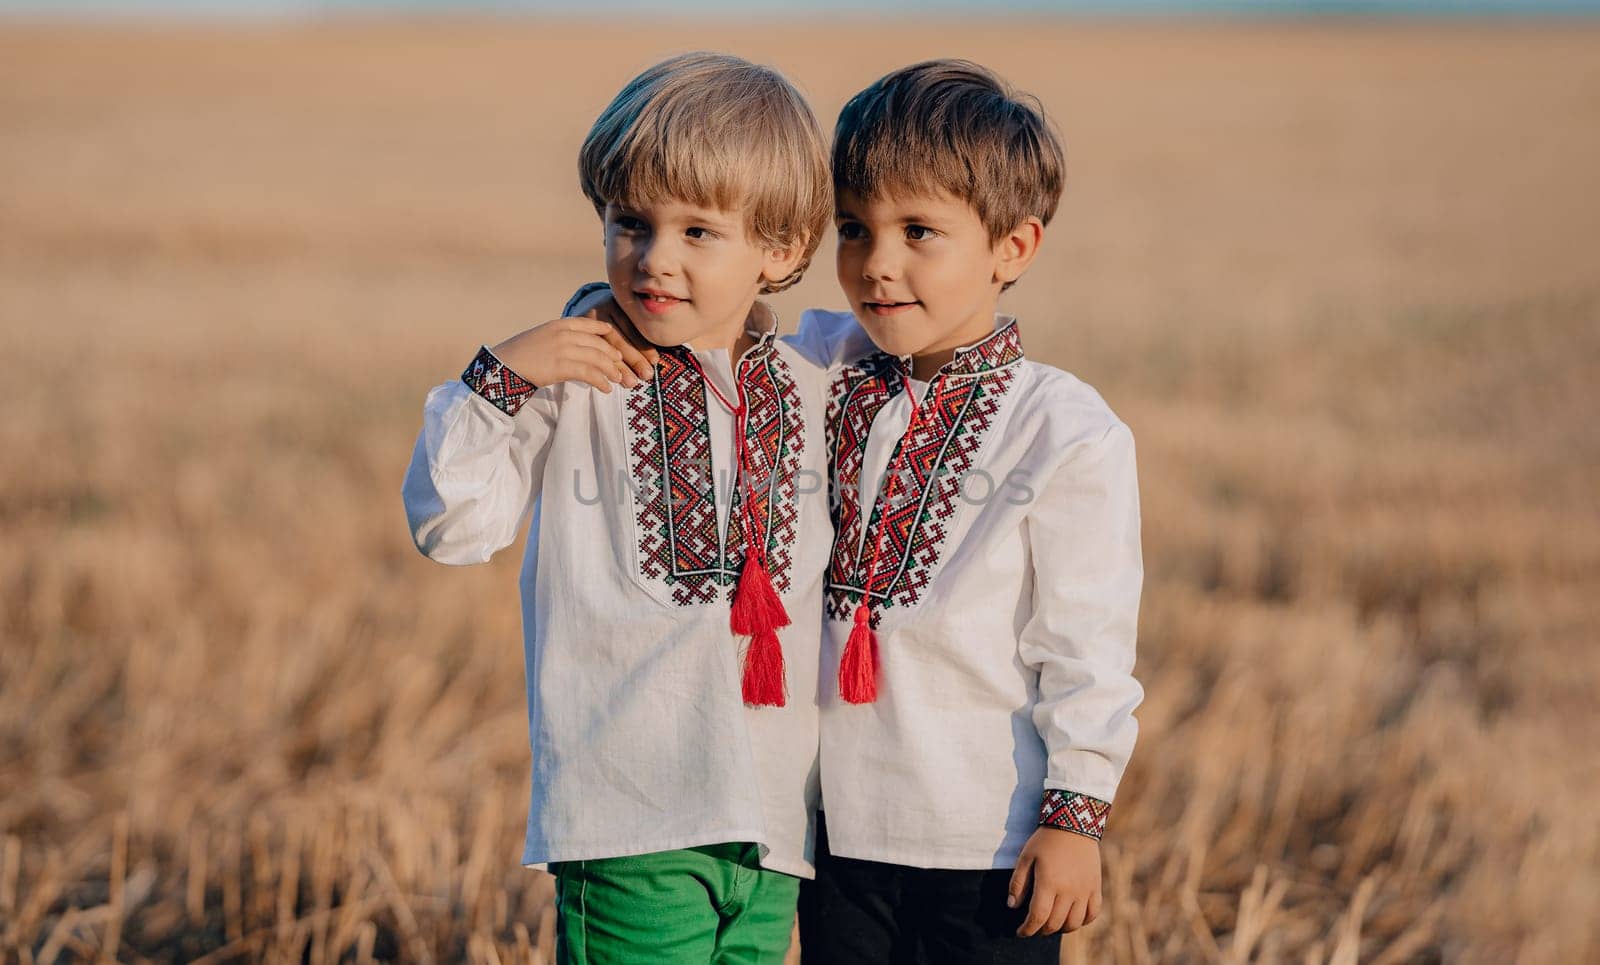 Happy brothers boys - Ukrainian patriots children in wheat field together. by kristina_kokhanova